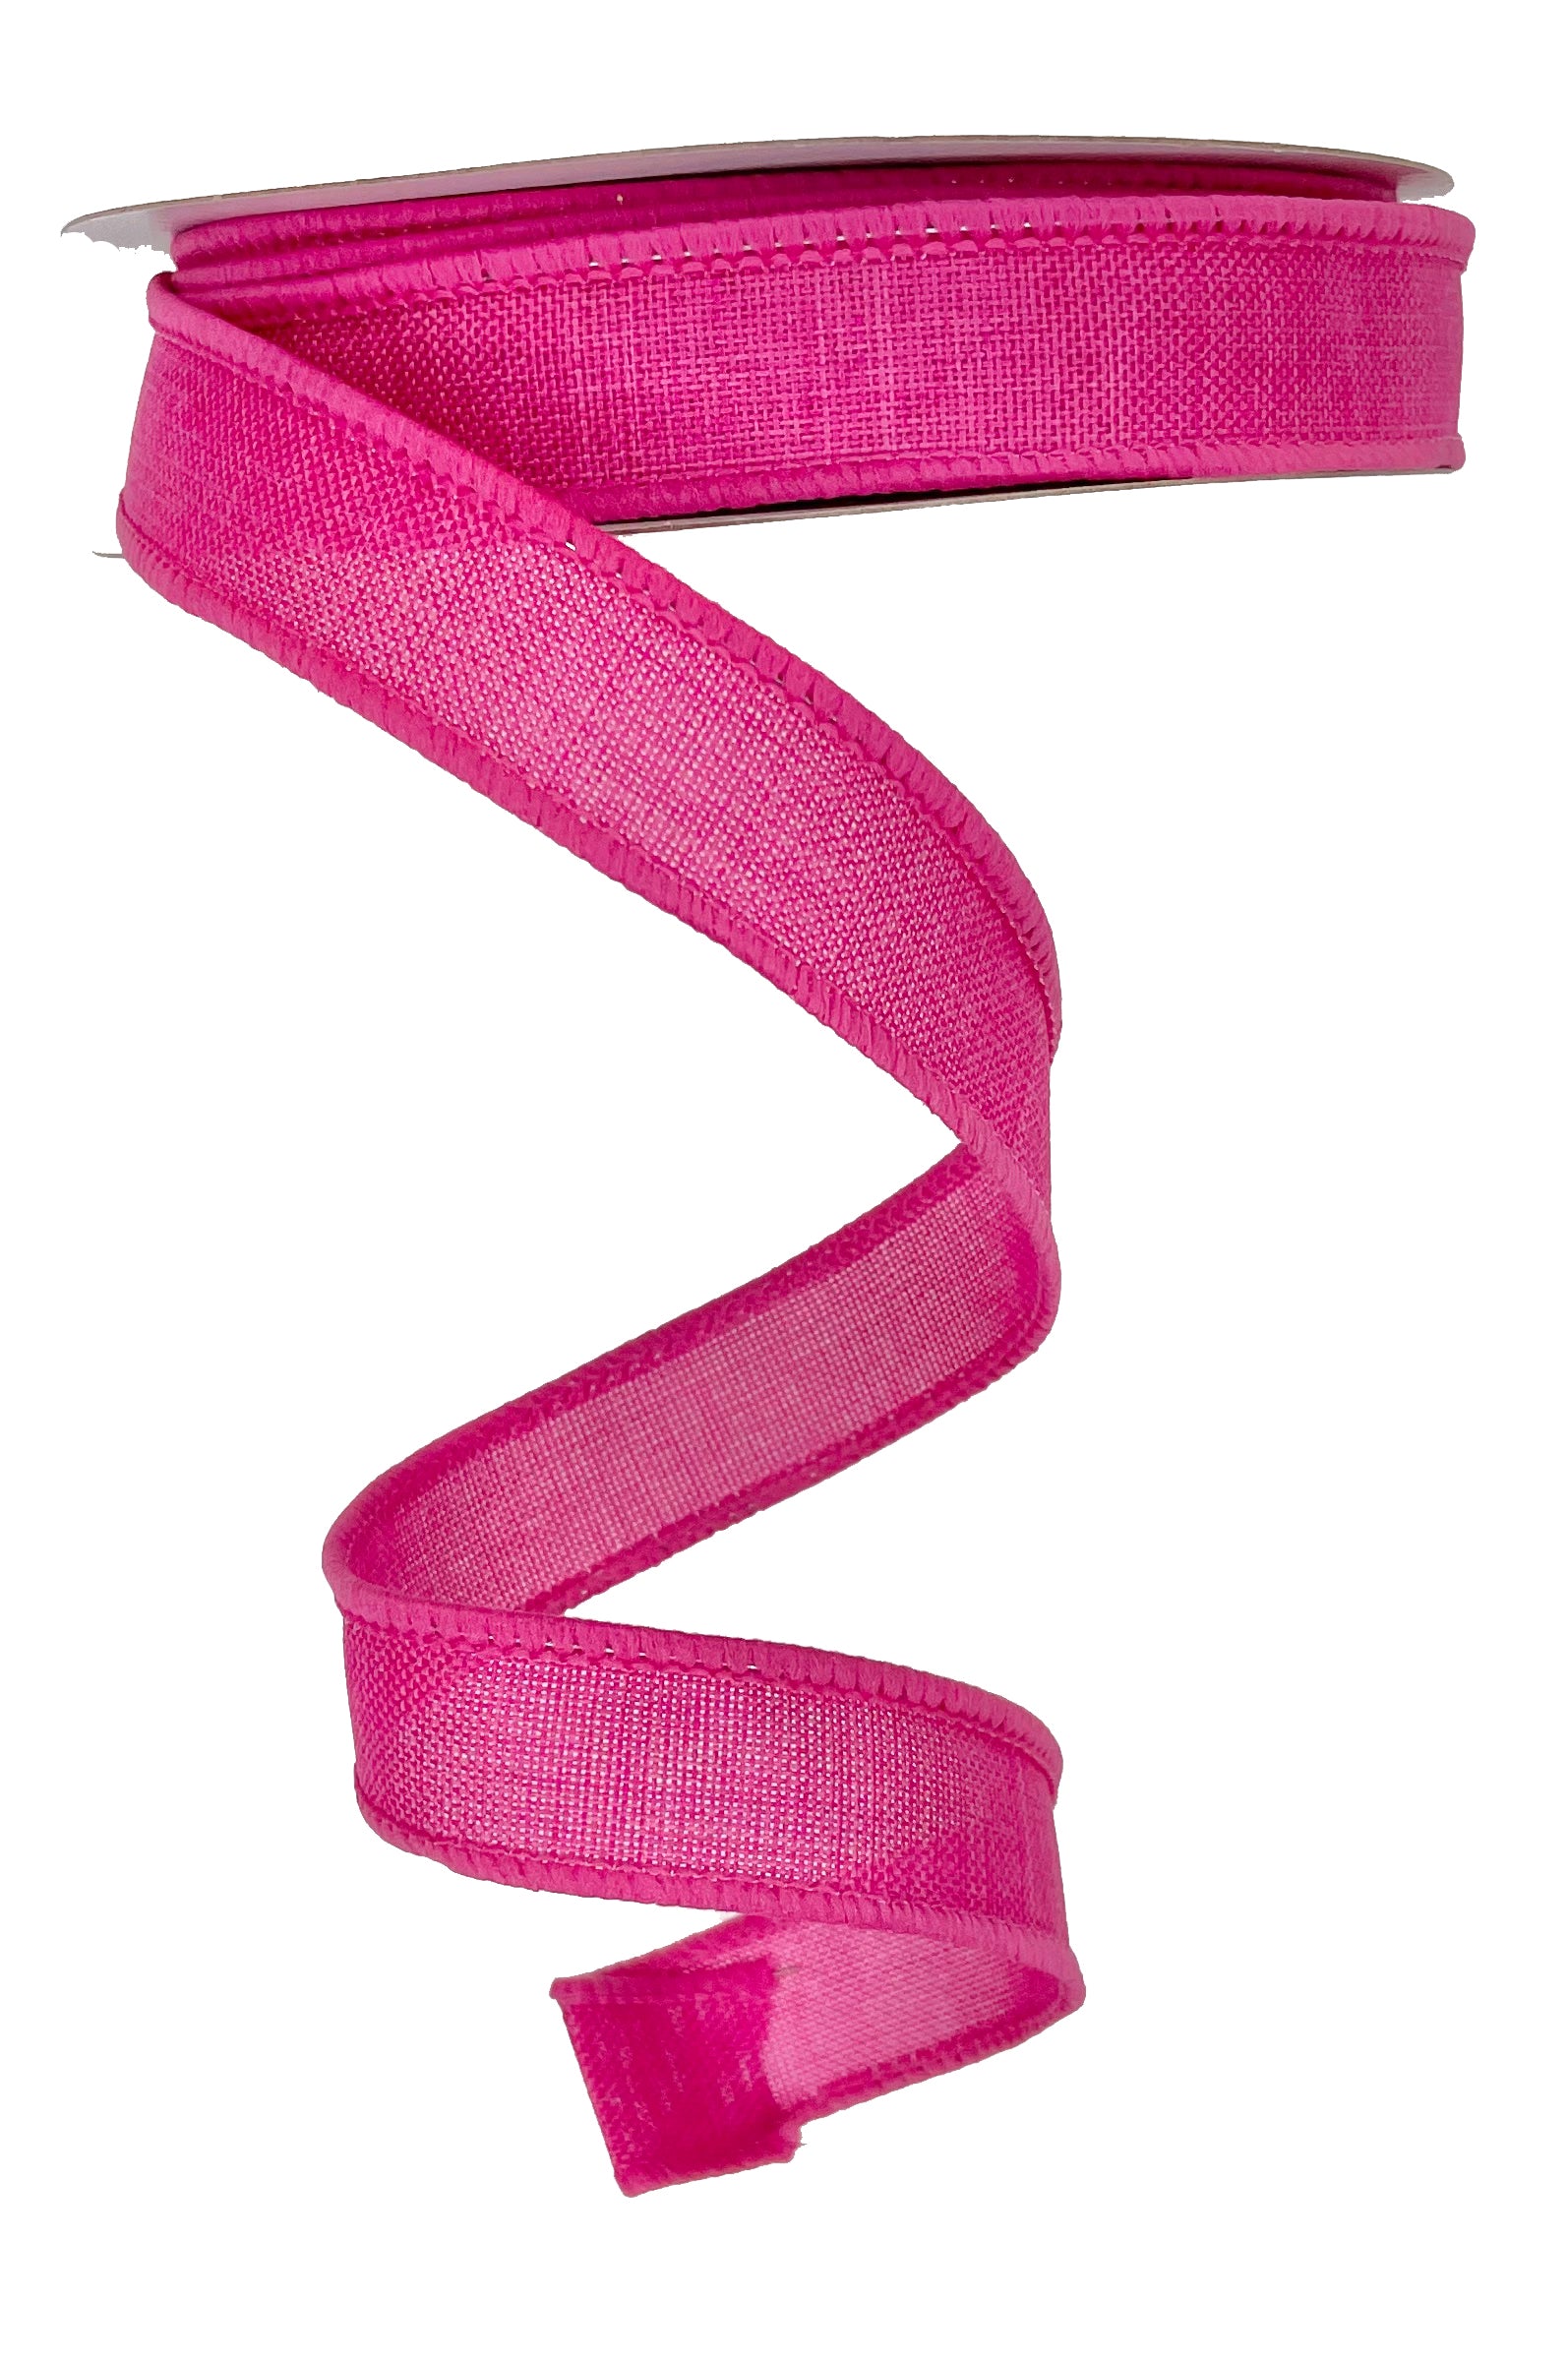 Wired Ribbon * Solid Fuchsia Canvas * 5/8